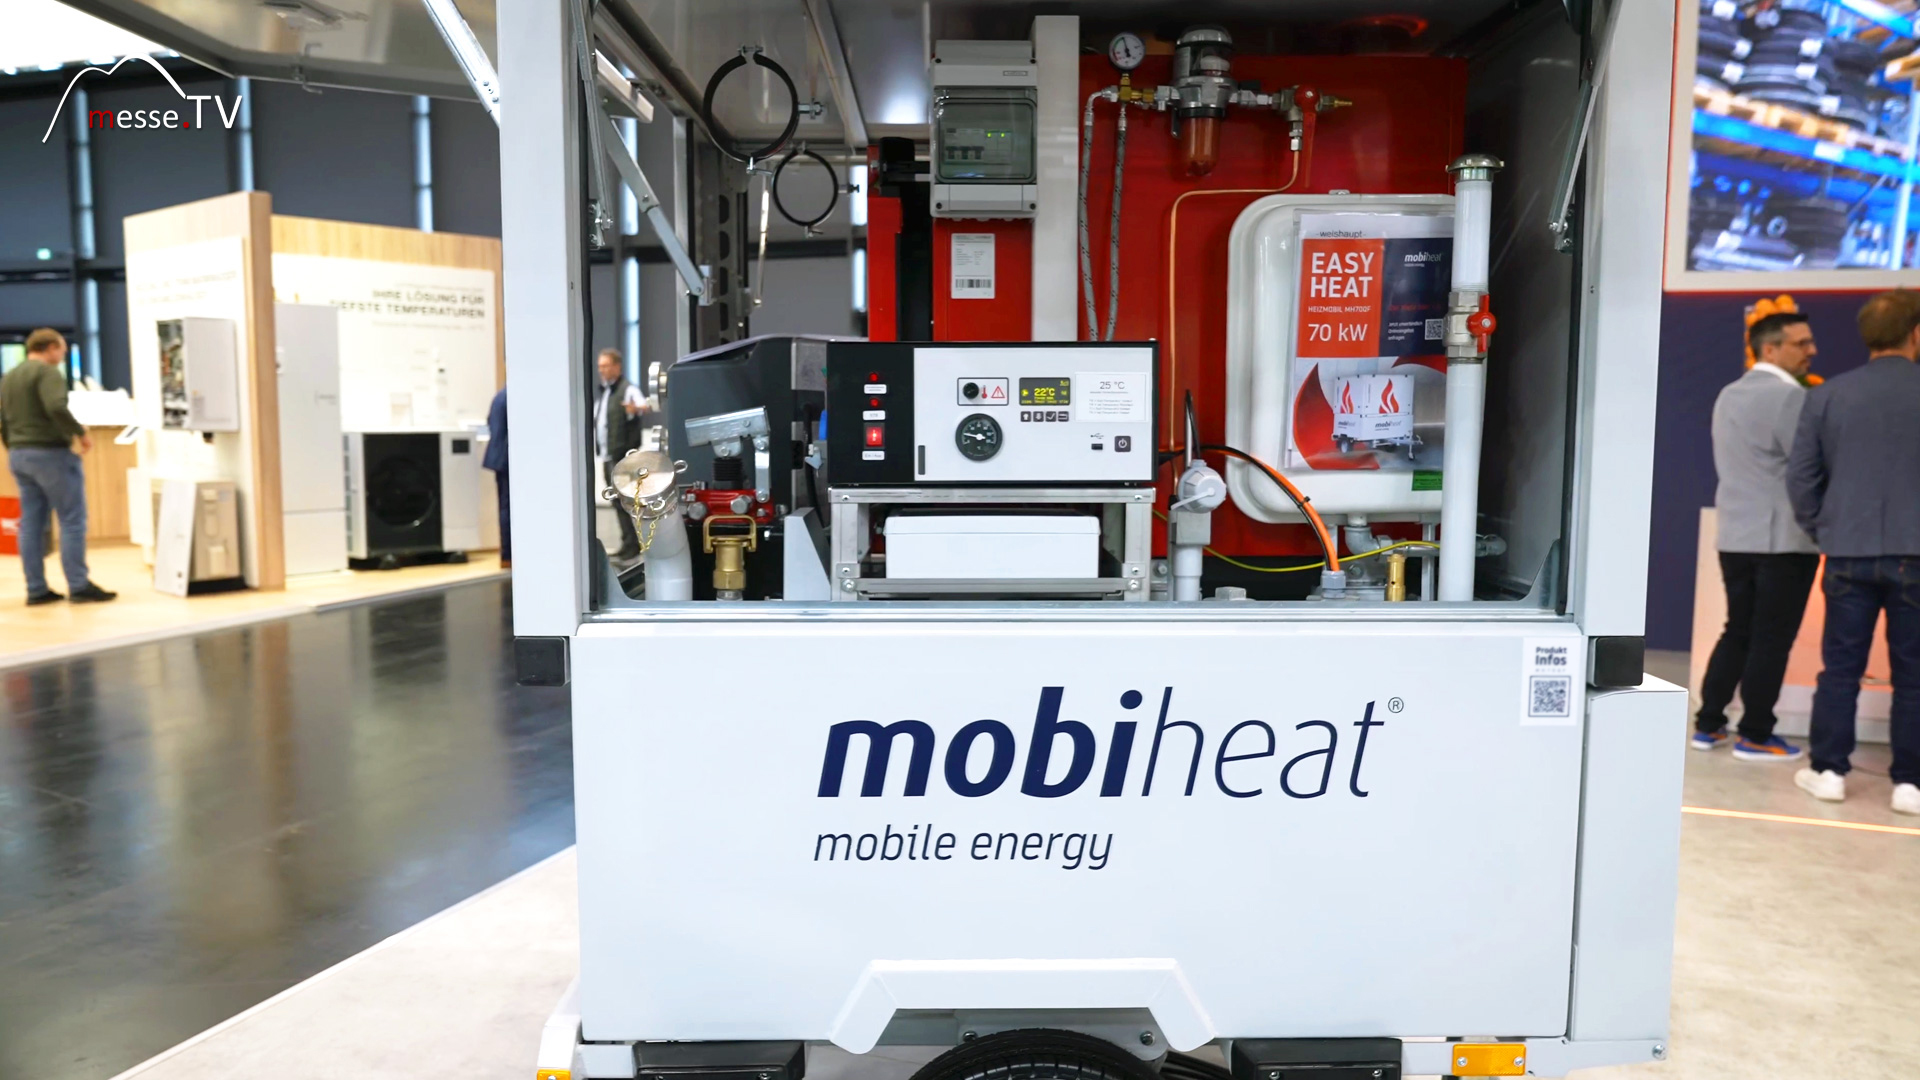 mobiheat mobile Kaelte Waerme 70kW Sanierung